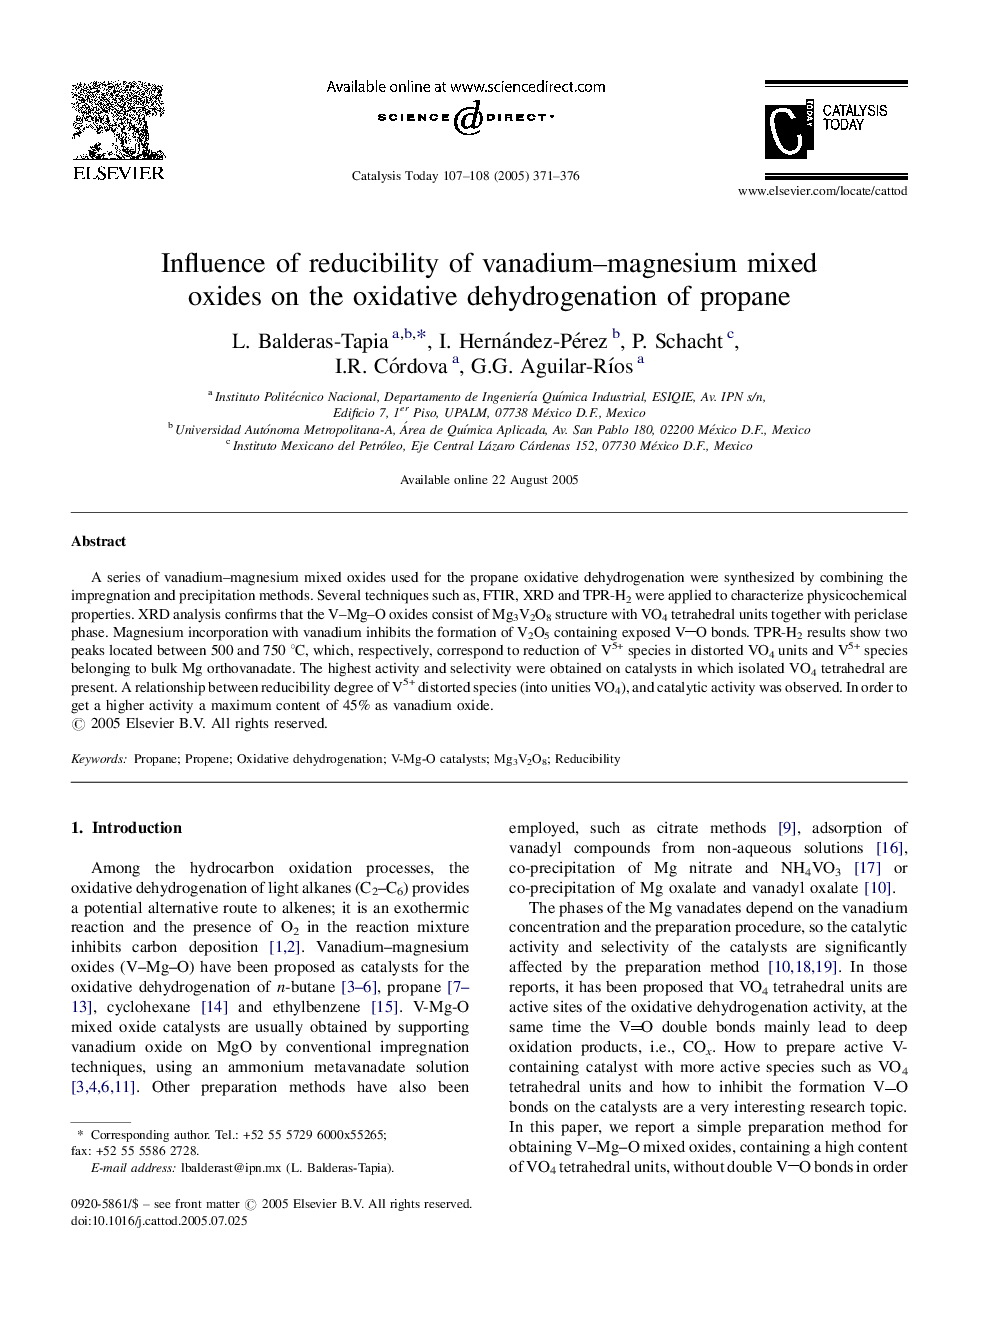 Influence of reducibility of vanadium-magnesium mixed oxides on the oxidative dehydrogenation of propane